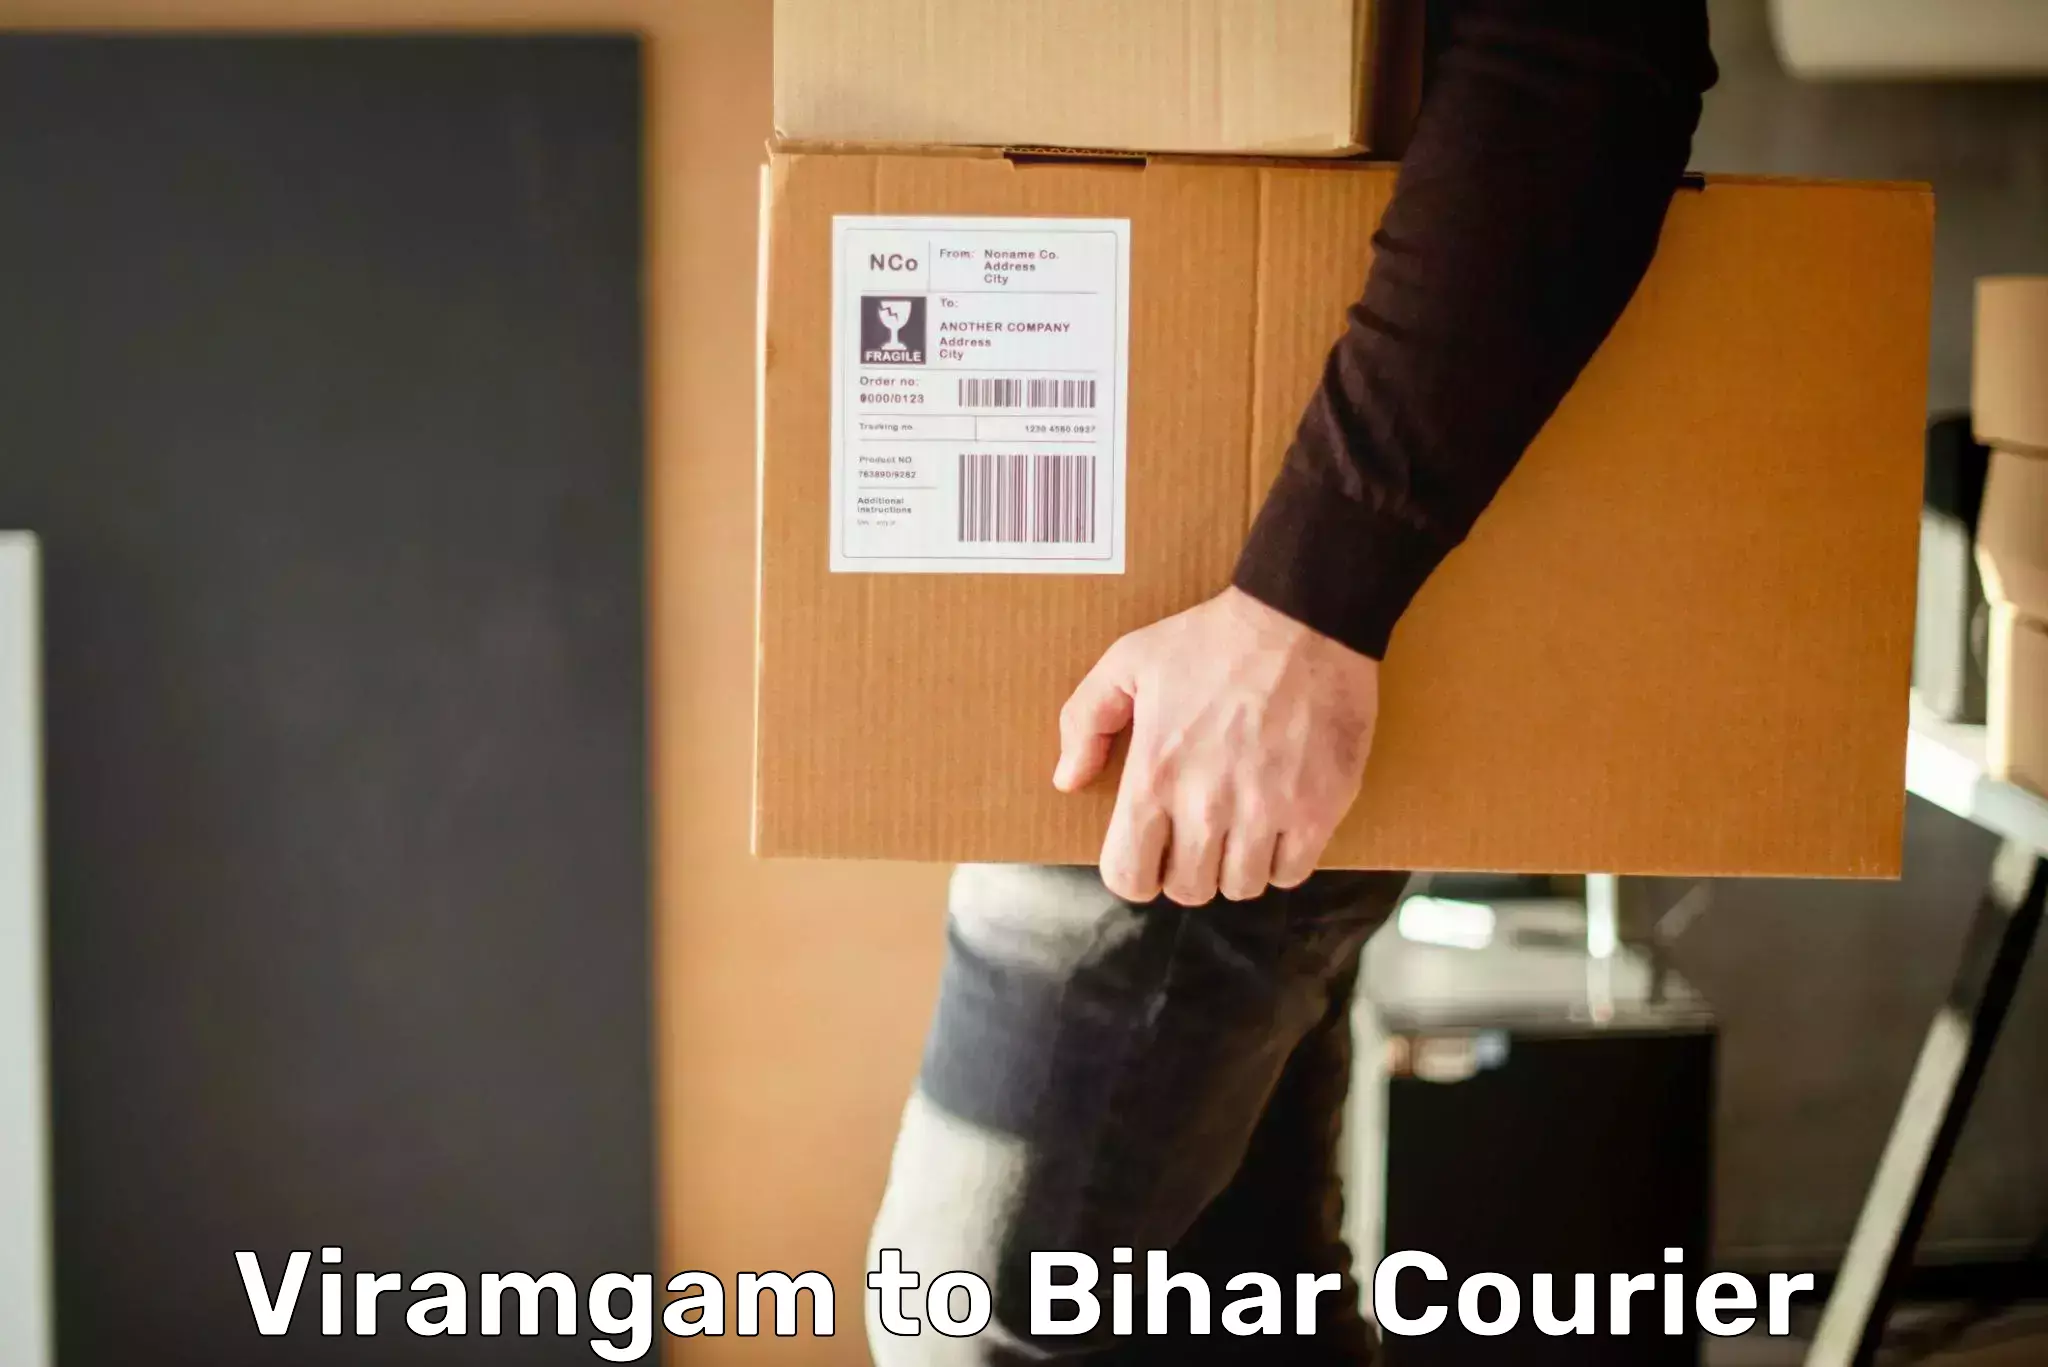 Courier app in Viramgam to Biraul